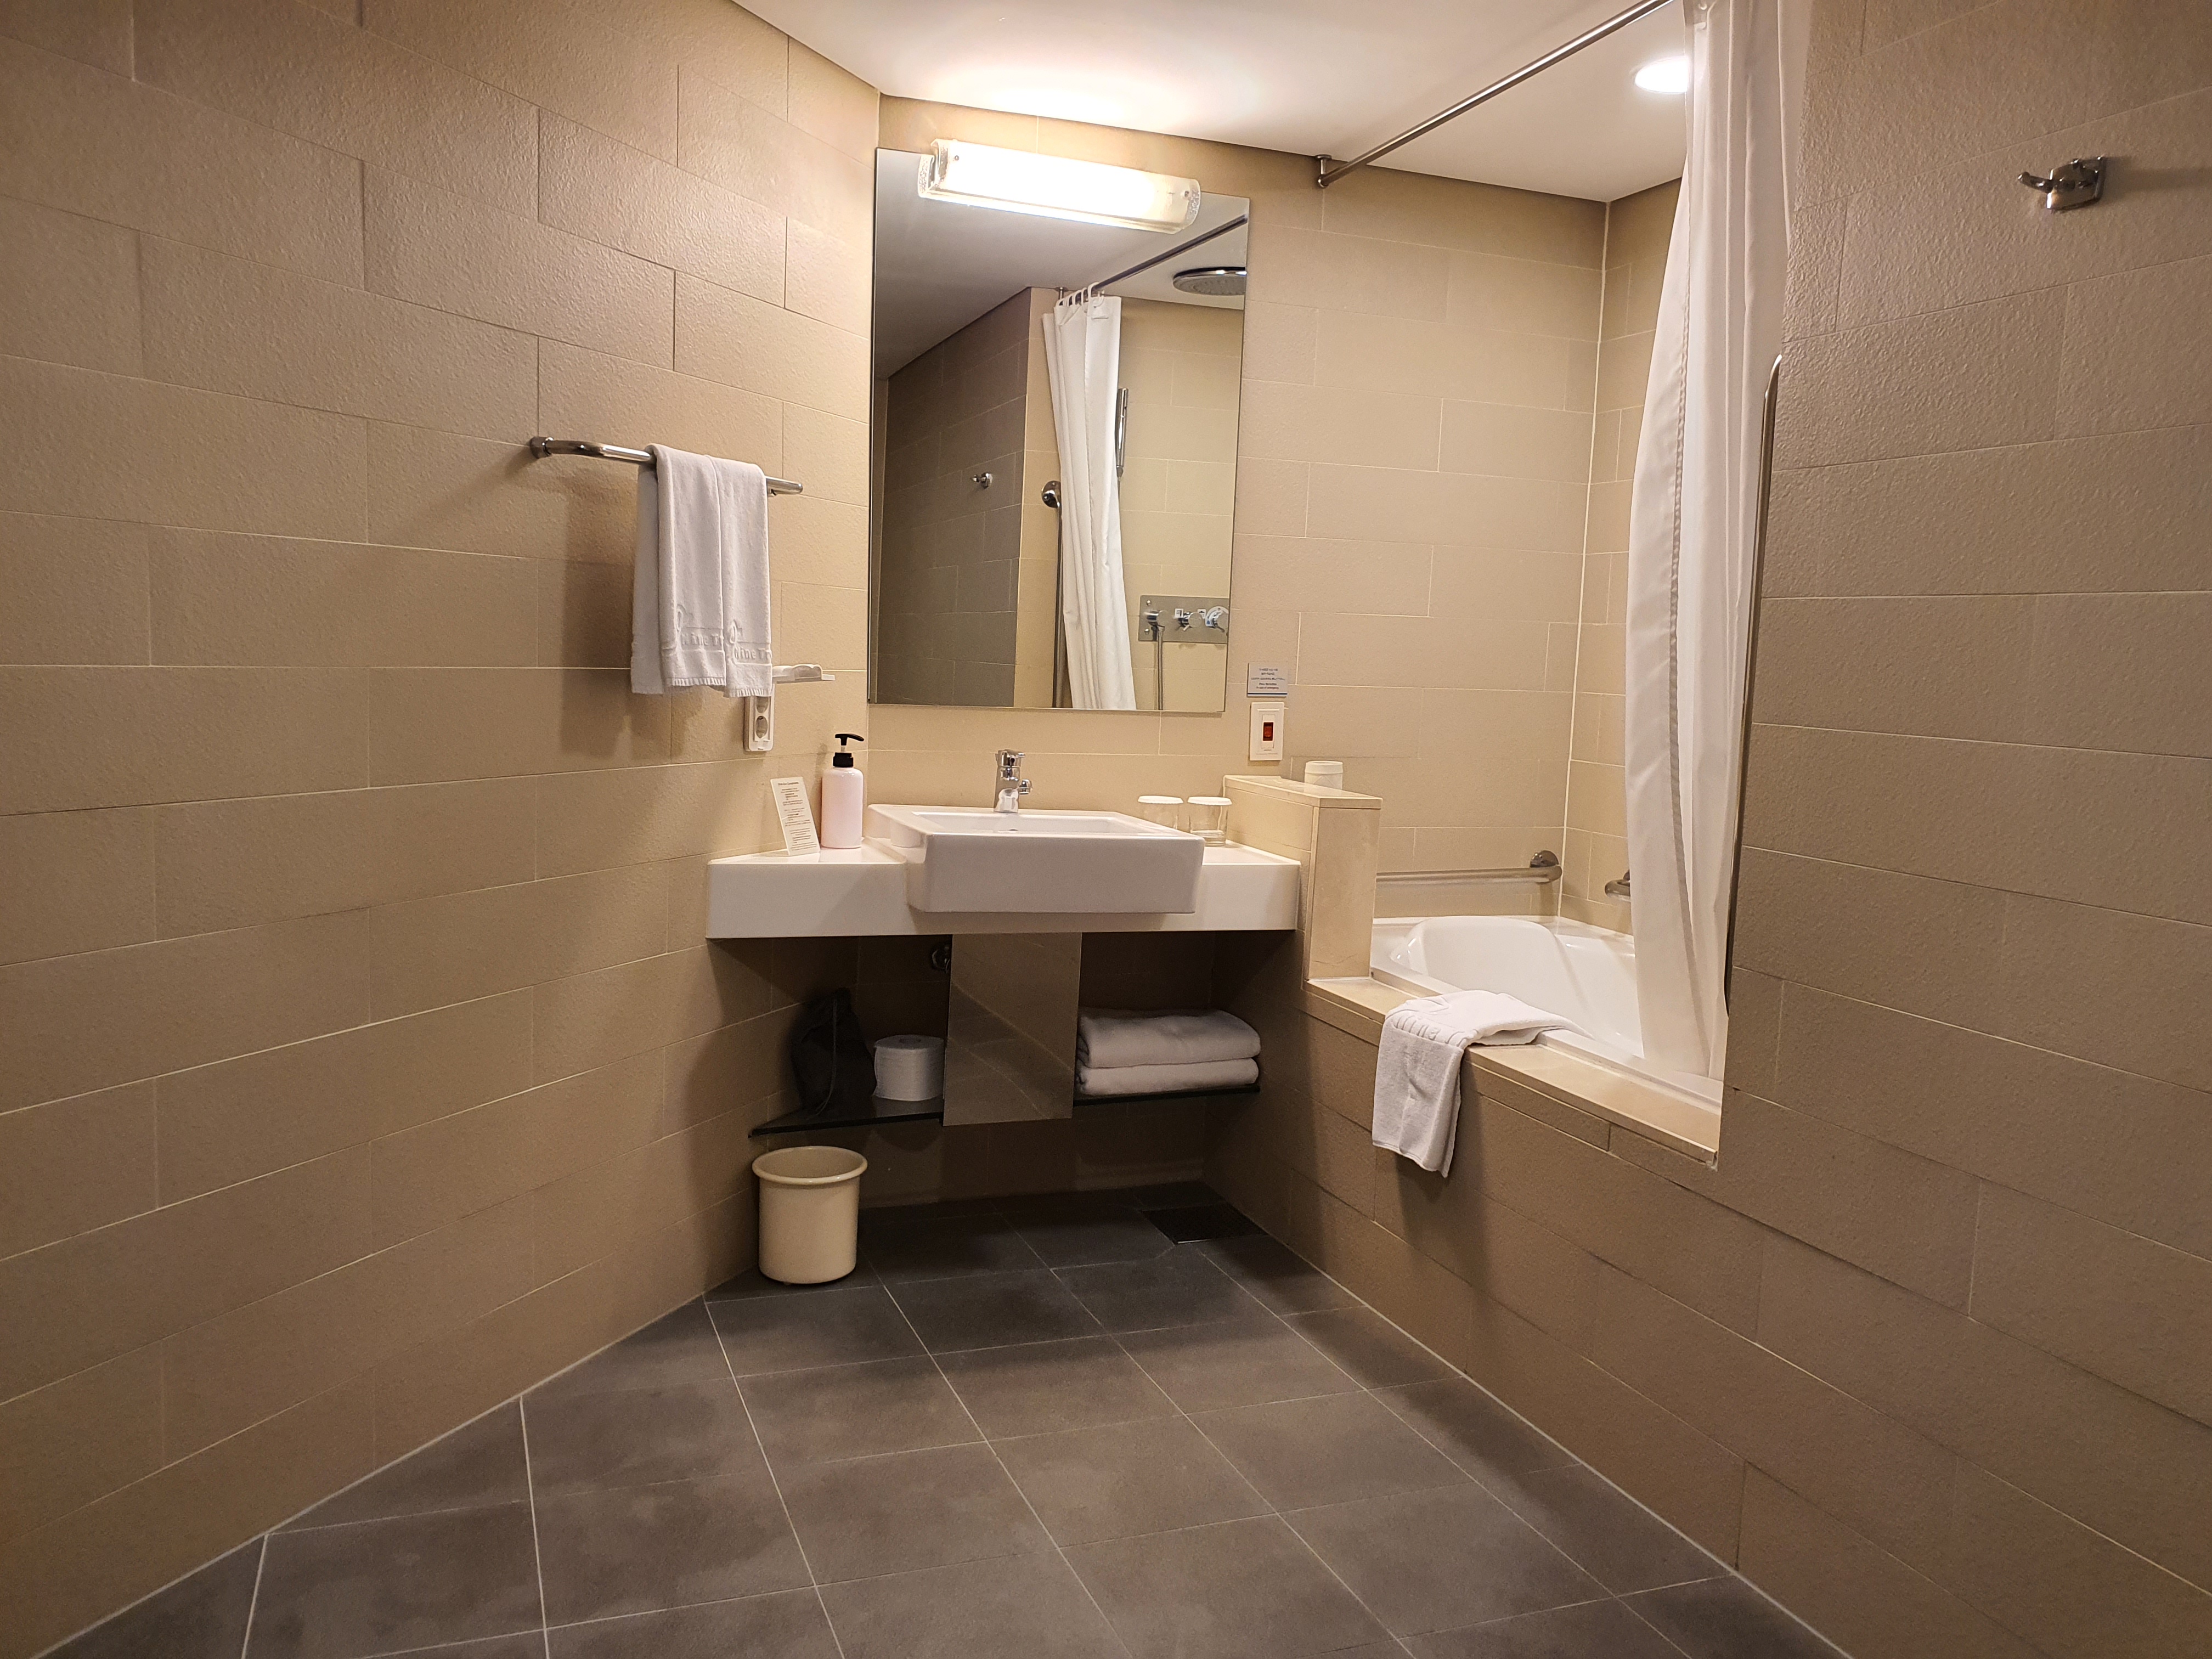 Accessible guestroom bathroom0 : Bathroom with a bath tub